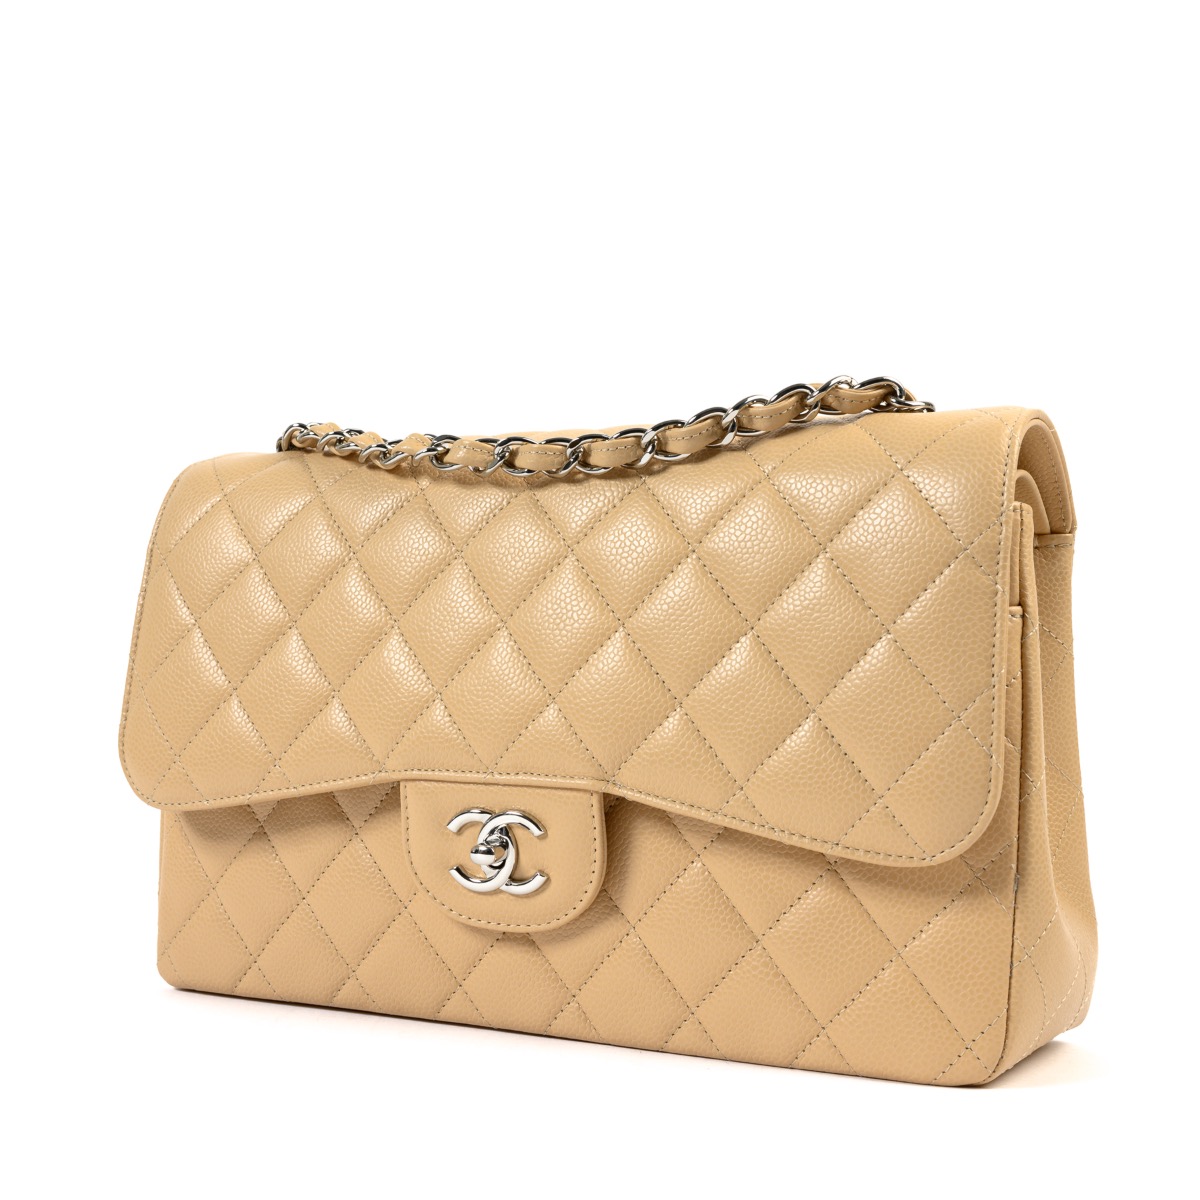 Authentic 2015-16 Chanel Le Boy Bag Flapbag Handbag Grey Burgundy